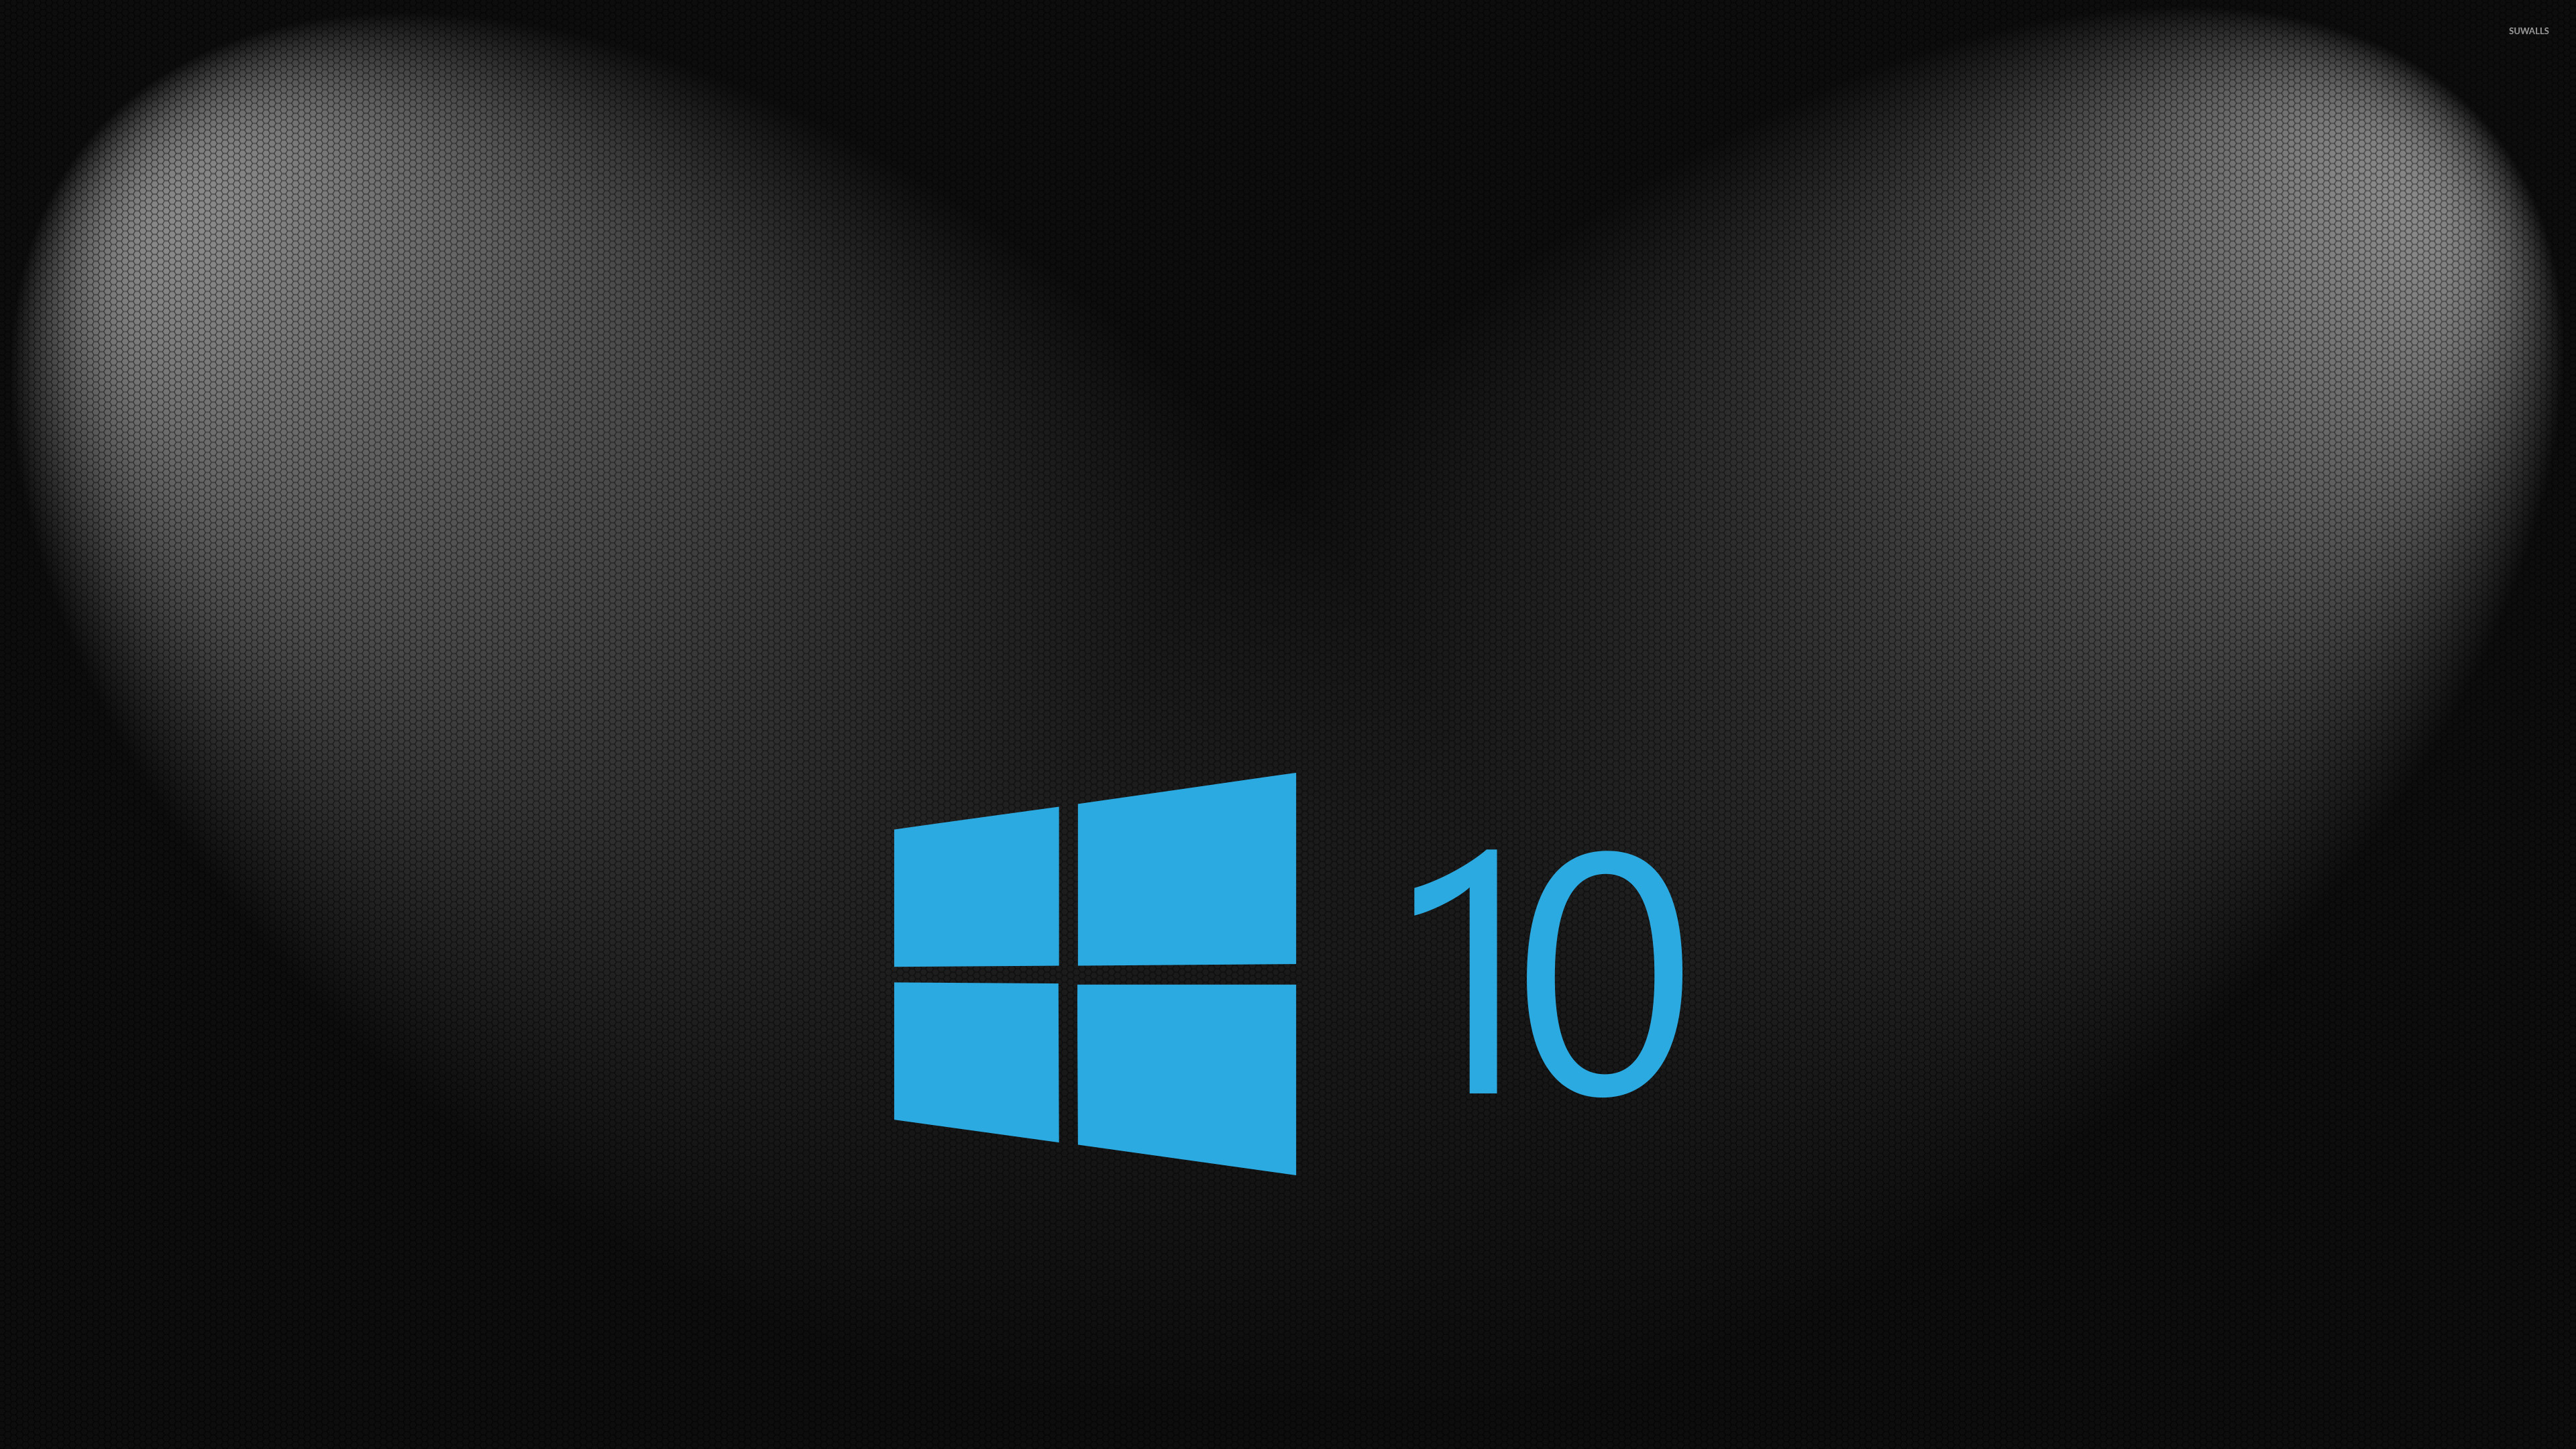 Windows 10 Simple Wallpaper